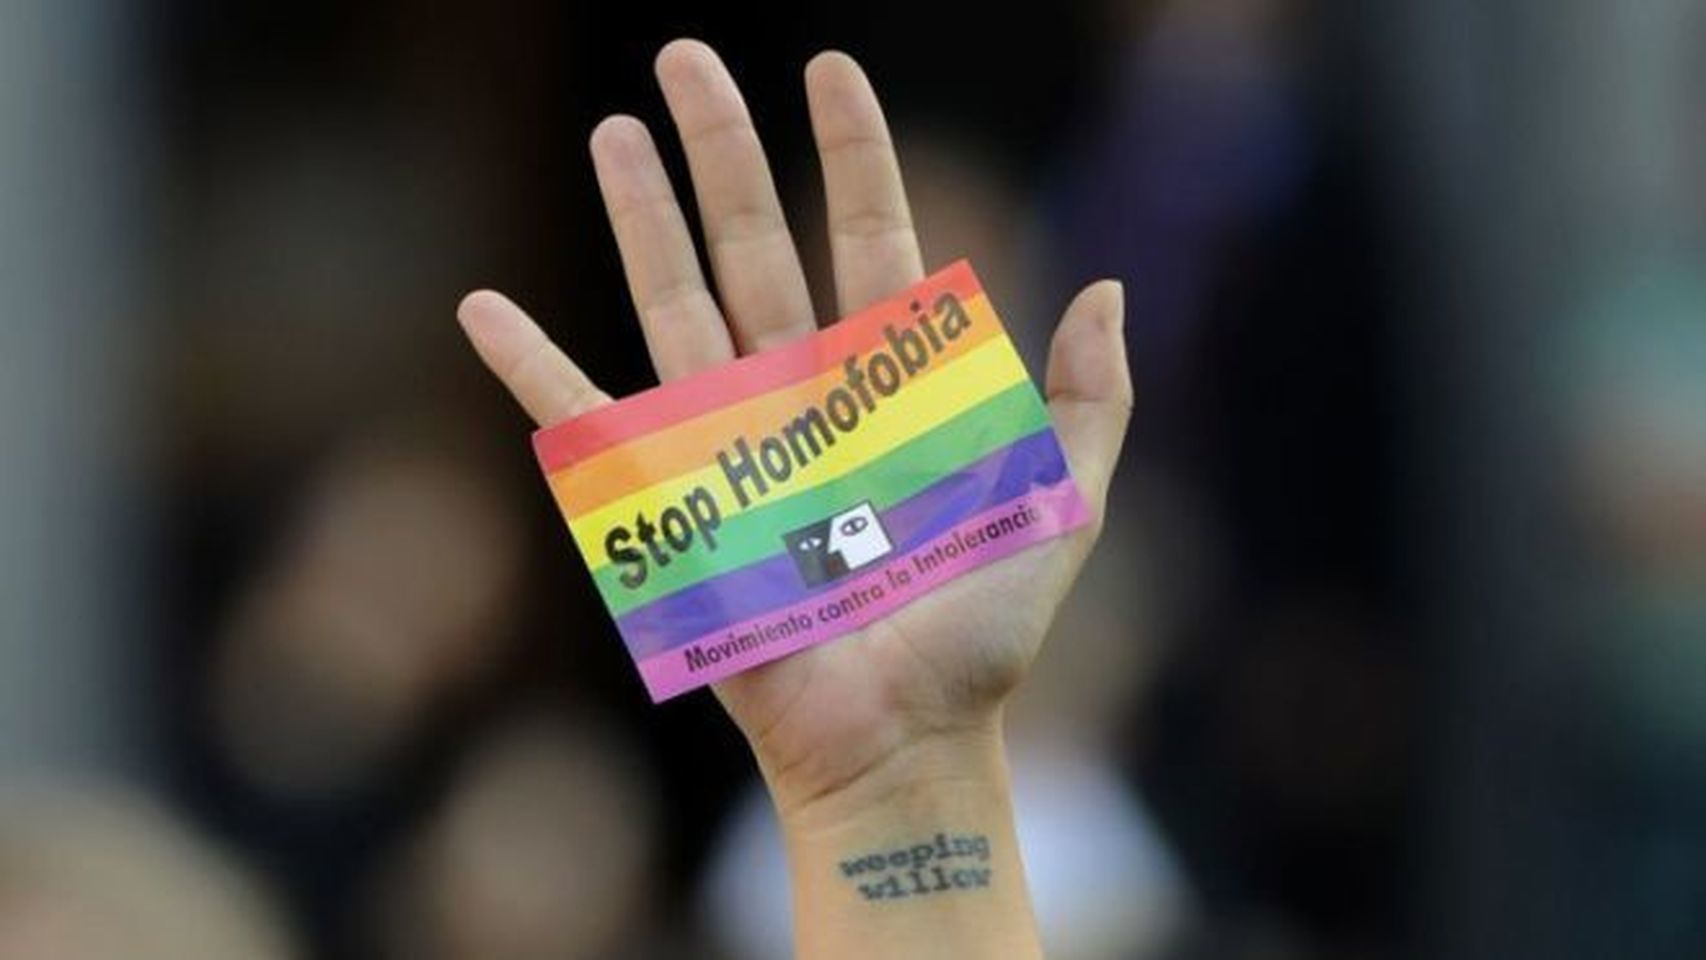 Stop homofobia.